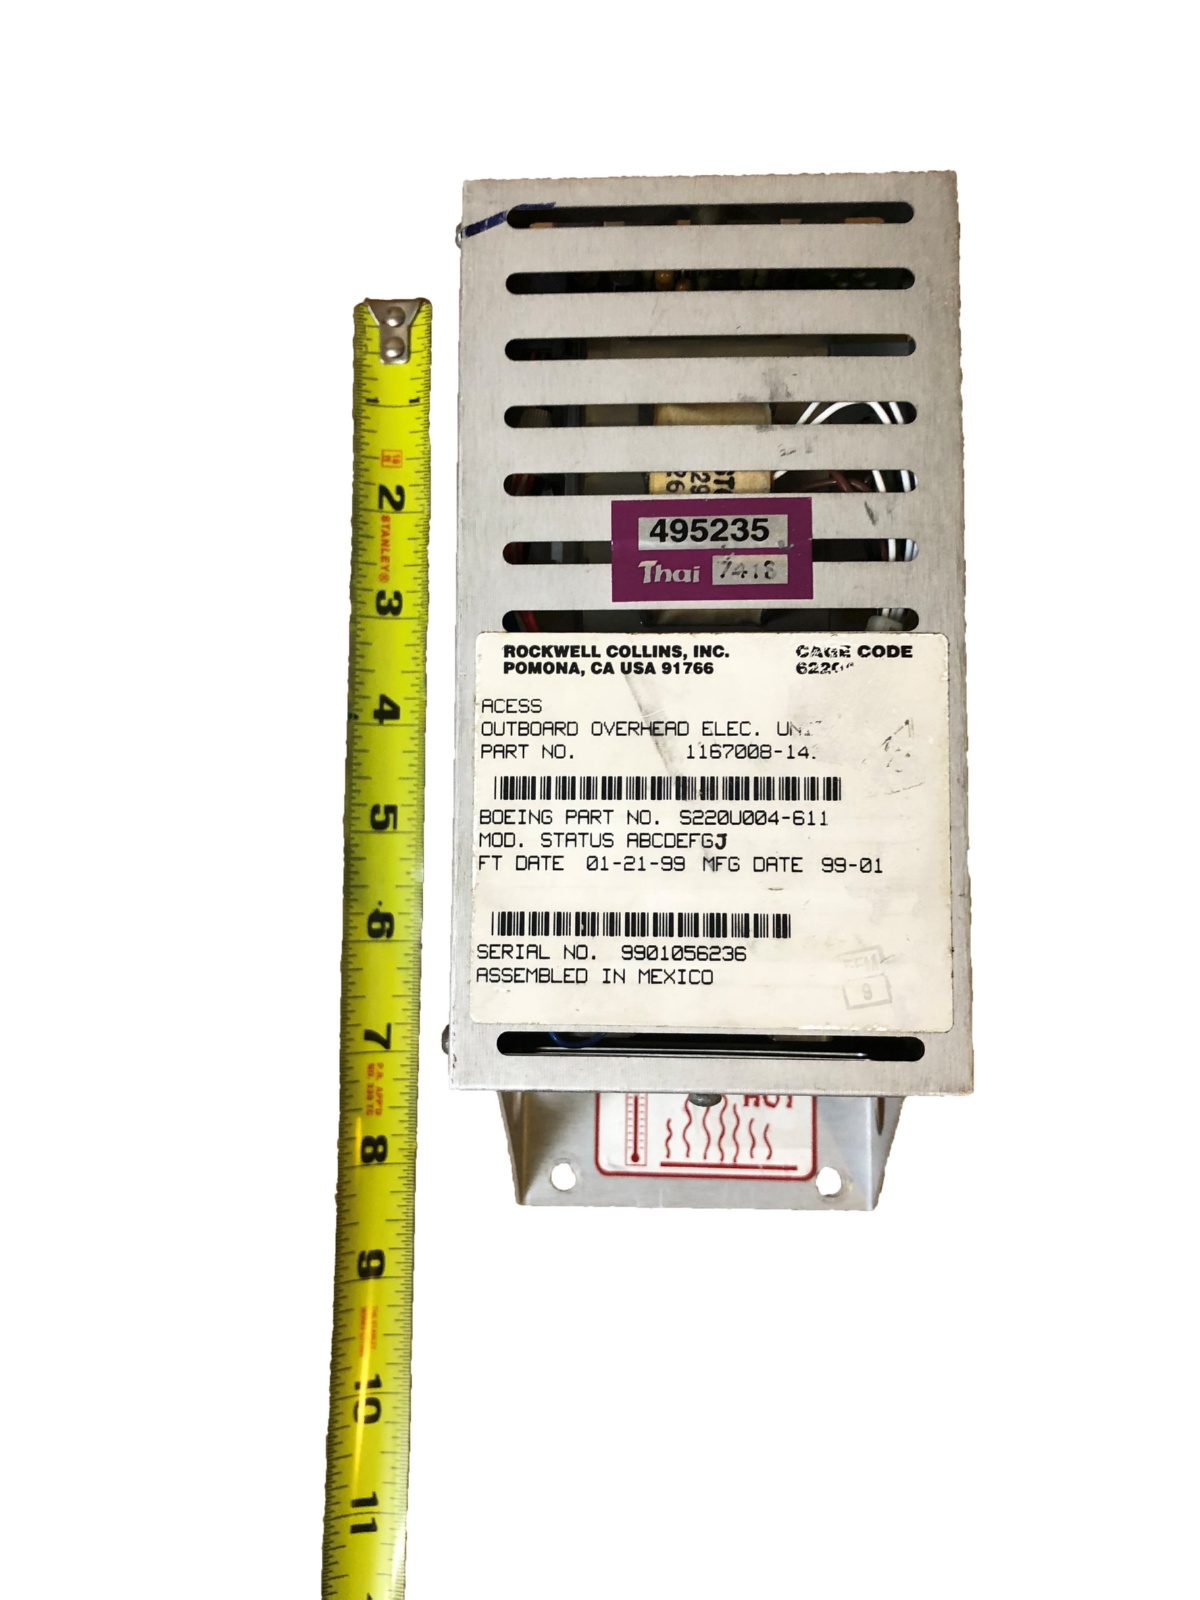 Outboard Overhead Electrical Unit Top Measure